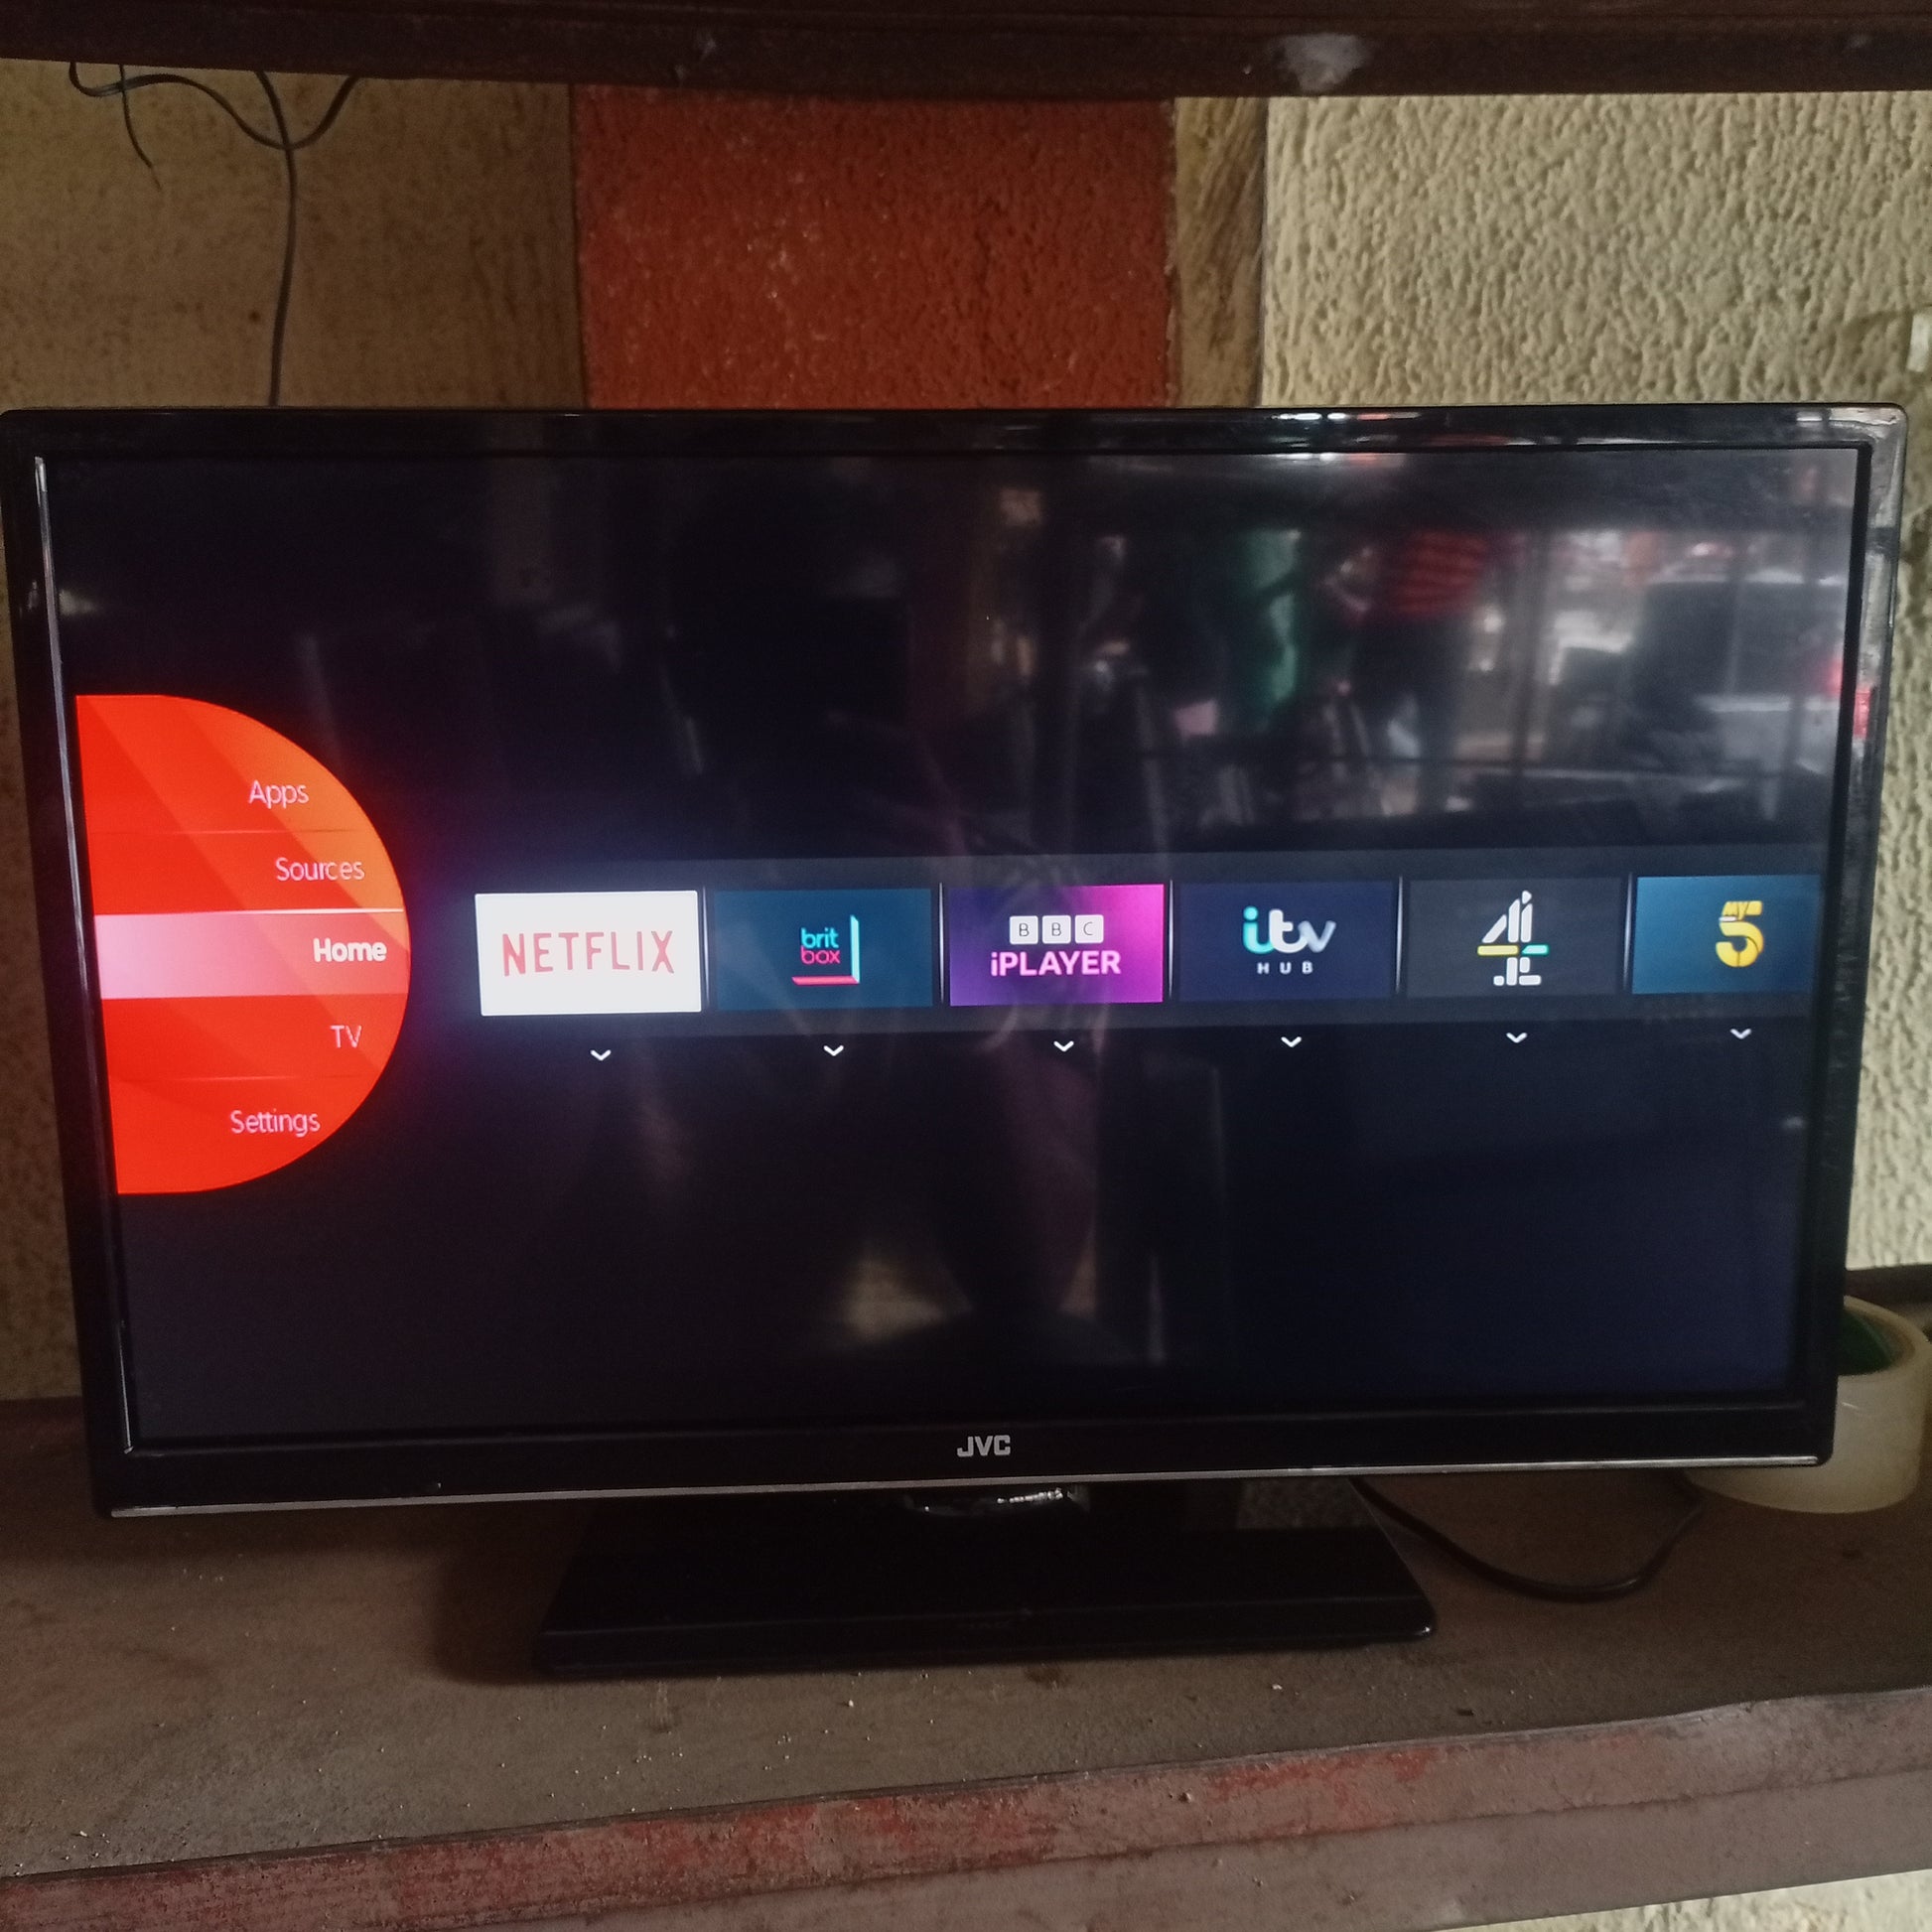 JVC 24 inch LT-24C685 Smart Full HD LED TV (DVD Combo) + Built-in WiFi - Front View